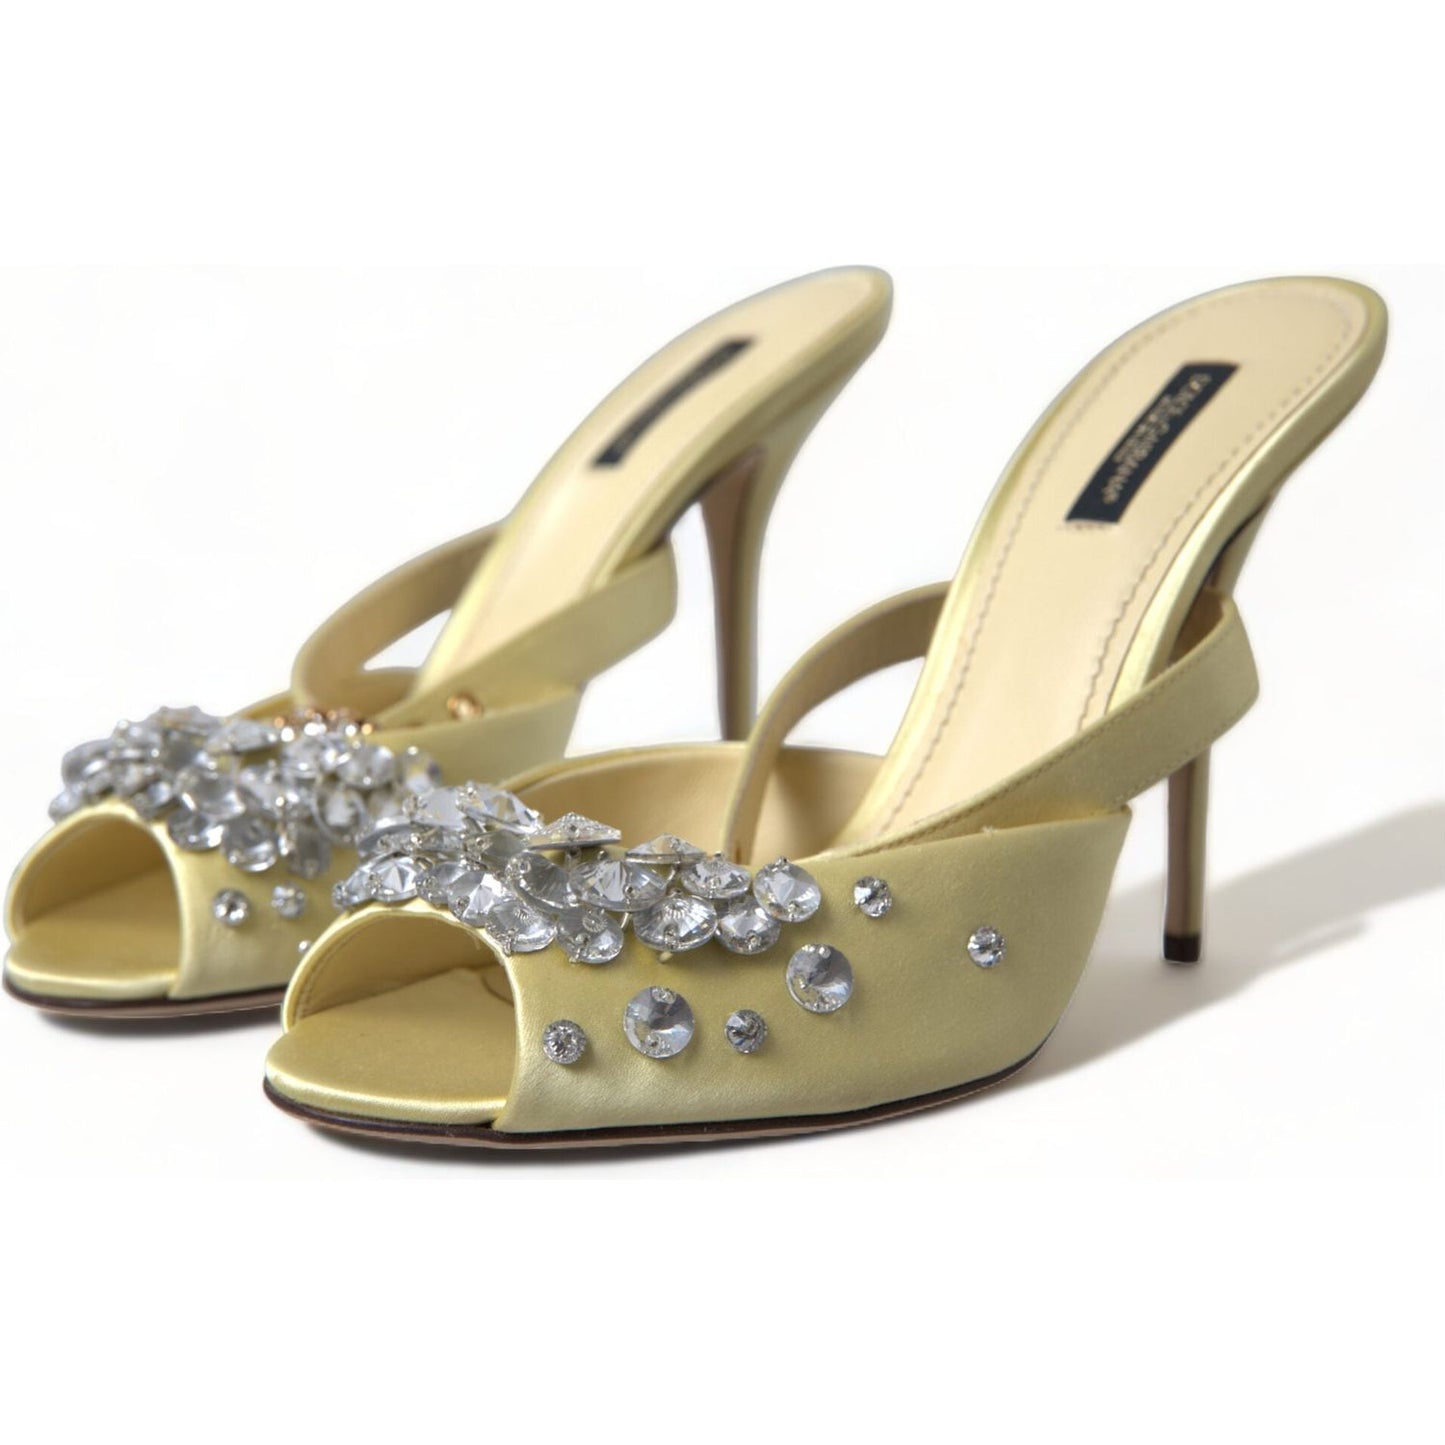 Dolce & Gabbana Crystal Embellished Silk Sandals yellow-satin-crystal-mary-janes-sandals 465A9696-bg-scaled-b5b90918-466.jpg